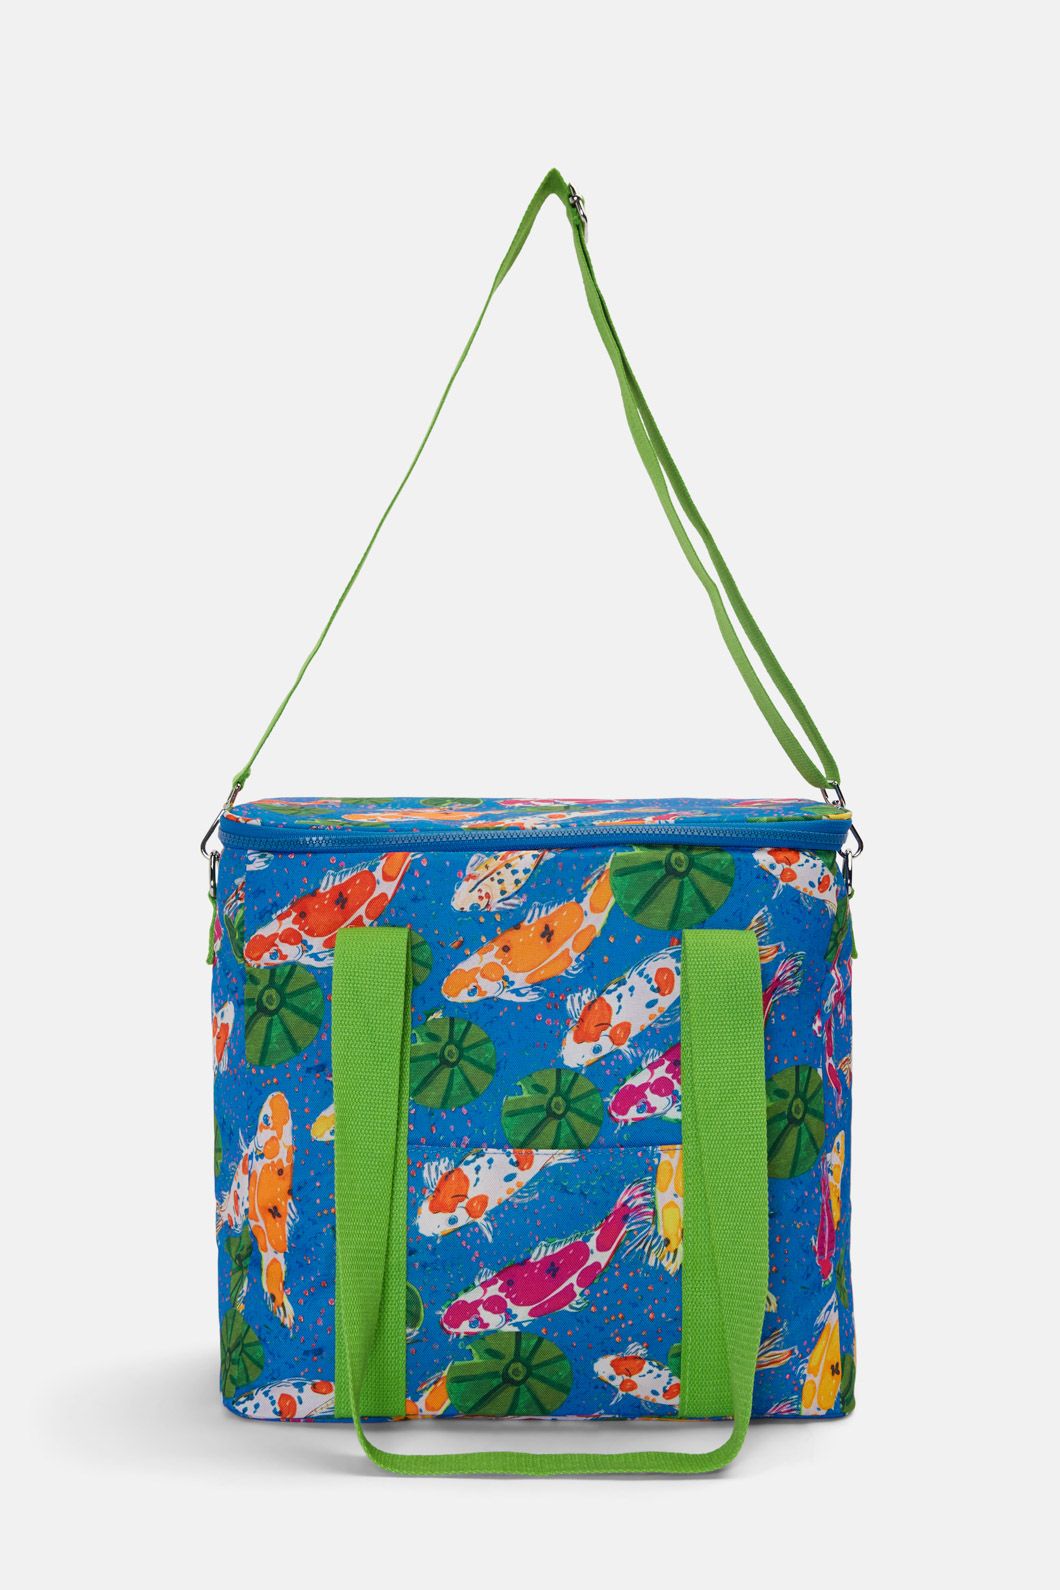 Unique Rubber Koi / Goldfish Purse | Purses, Tote handbags, Bags & totes